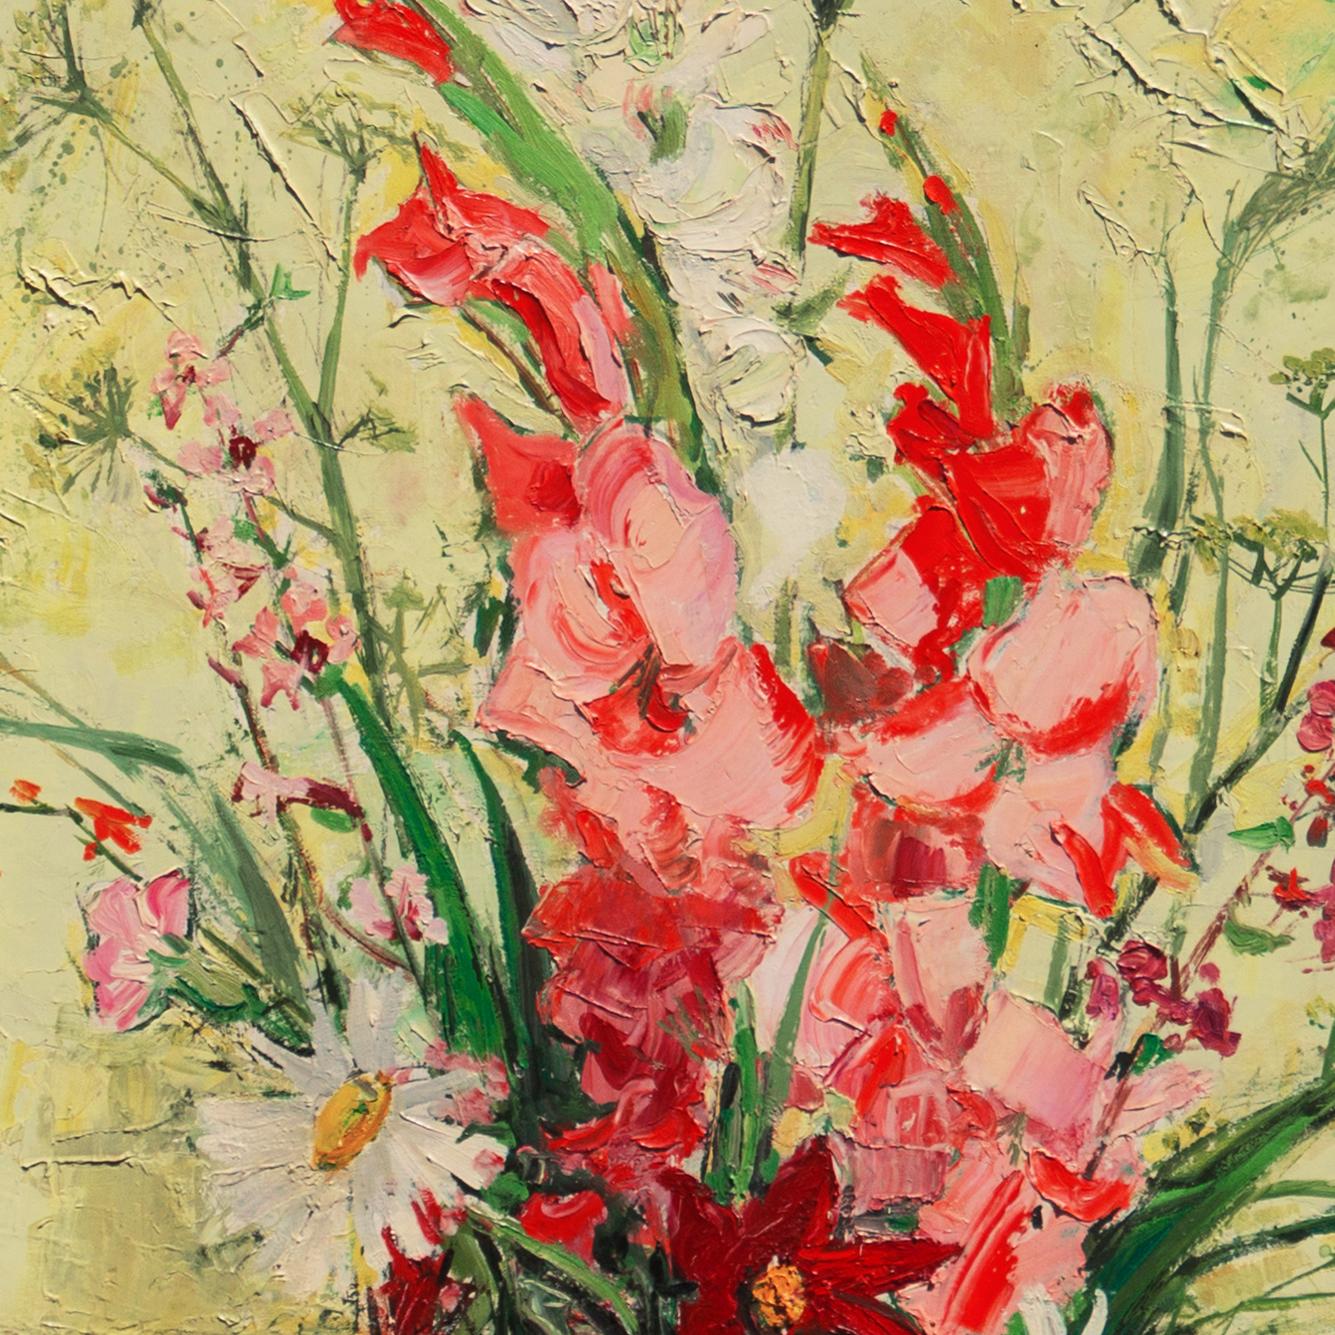 'Still Life with Florist', Paris, École des Beaux-Arts, Large Post-Impressionist - Modern Painting by Guily Joffrin